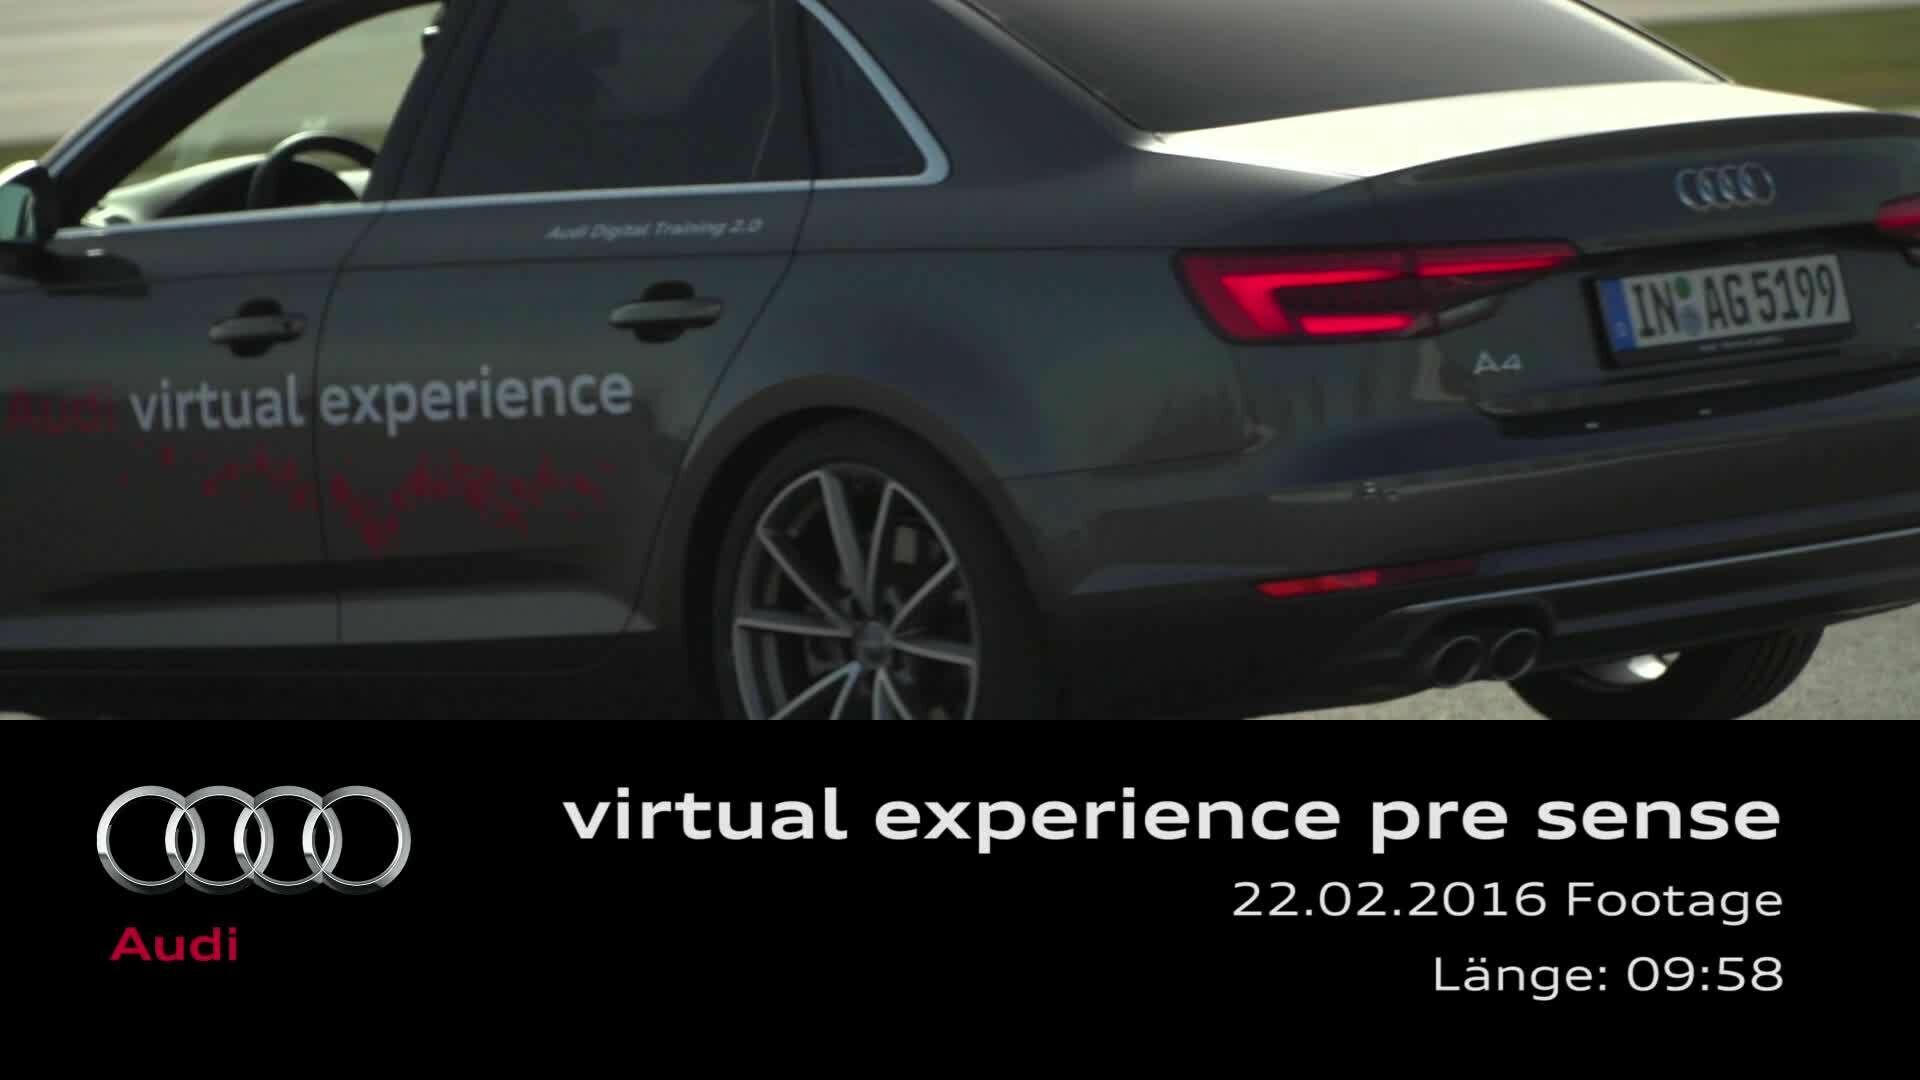 Virtual Experience pre sense - Footage